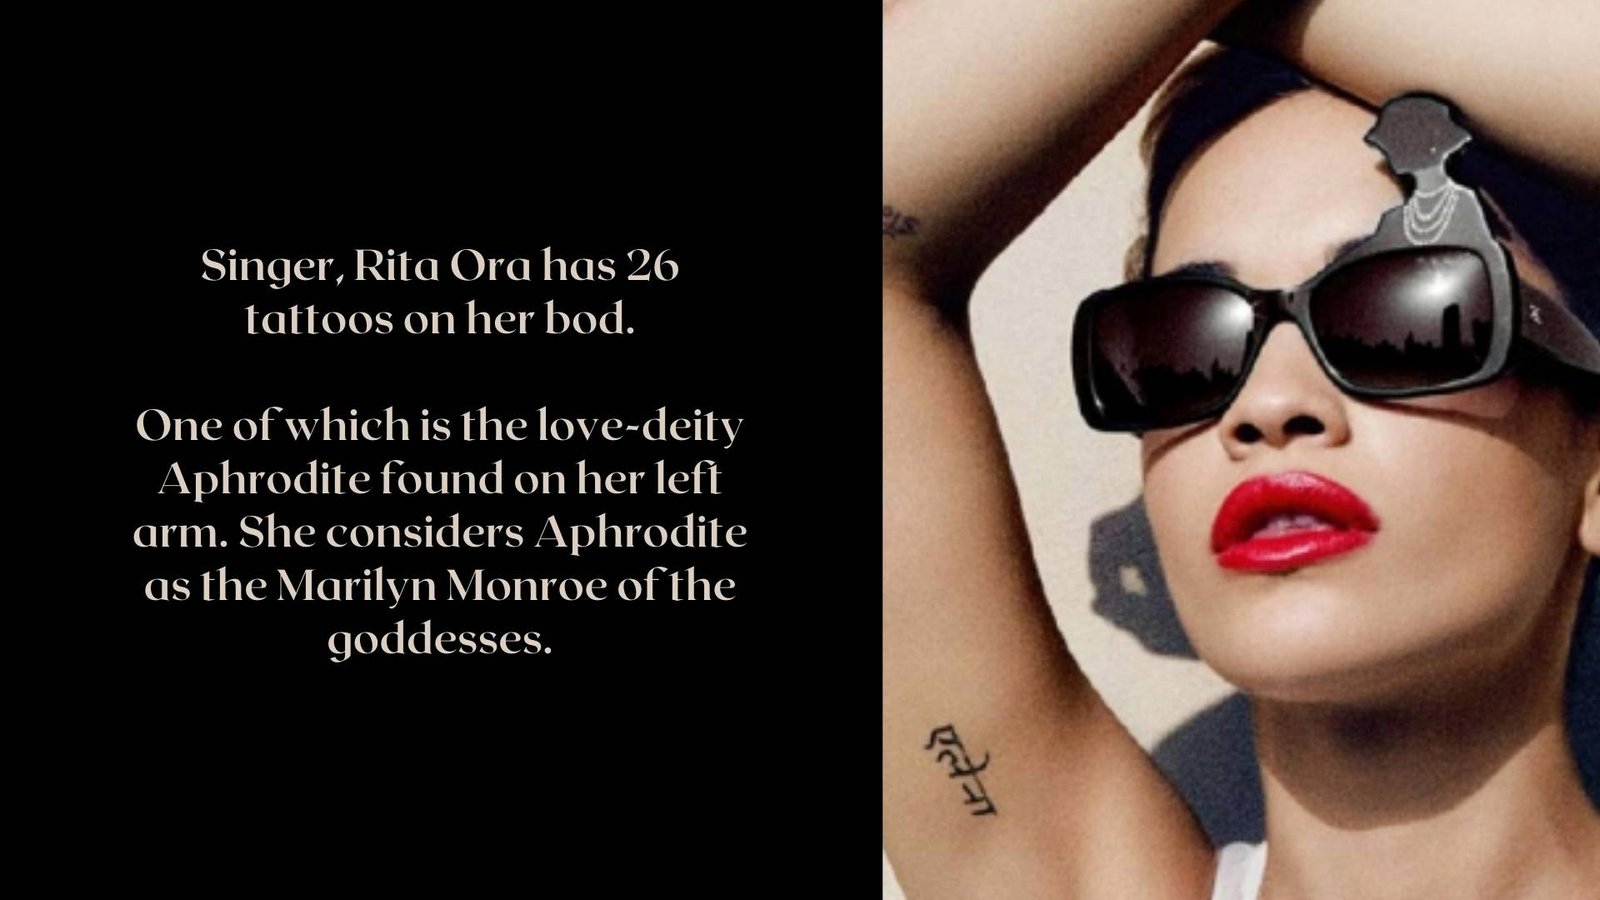 Rita Ora’s Tattoos & Their Meanings